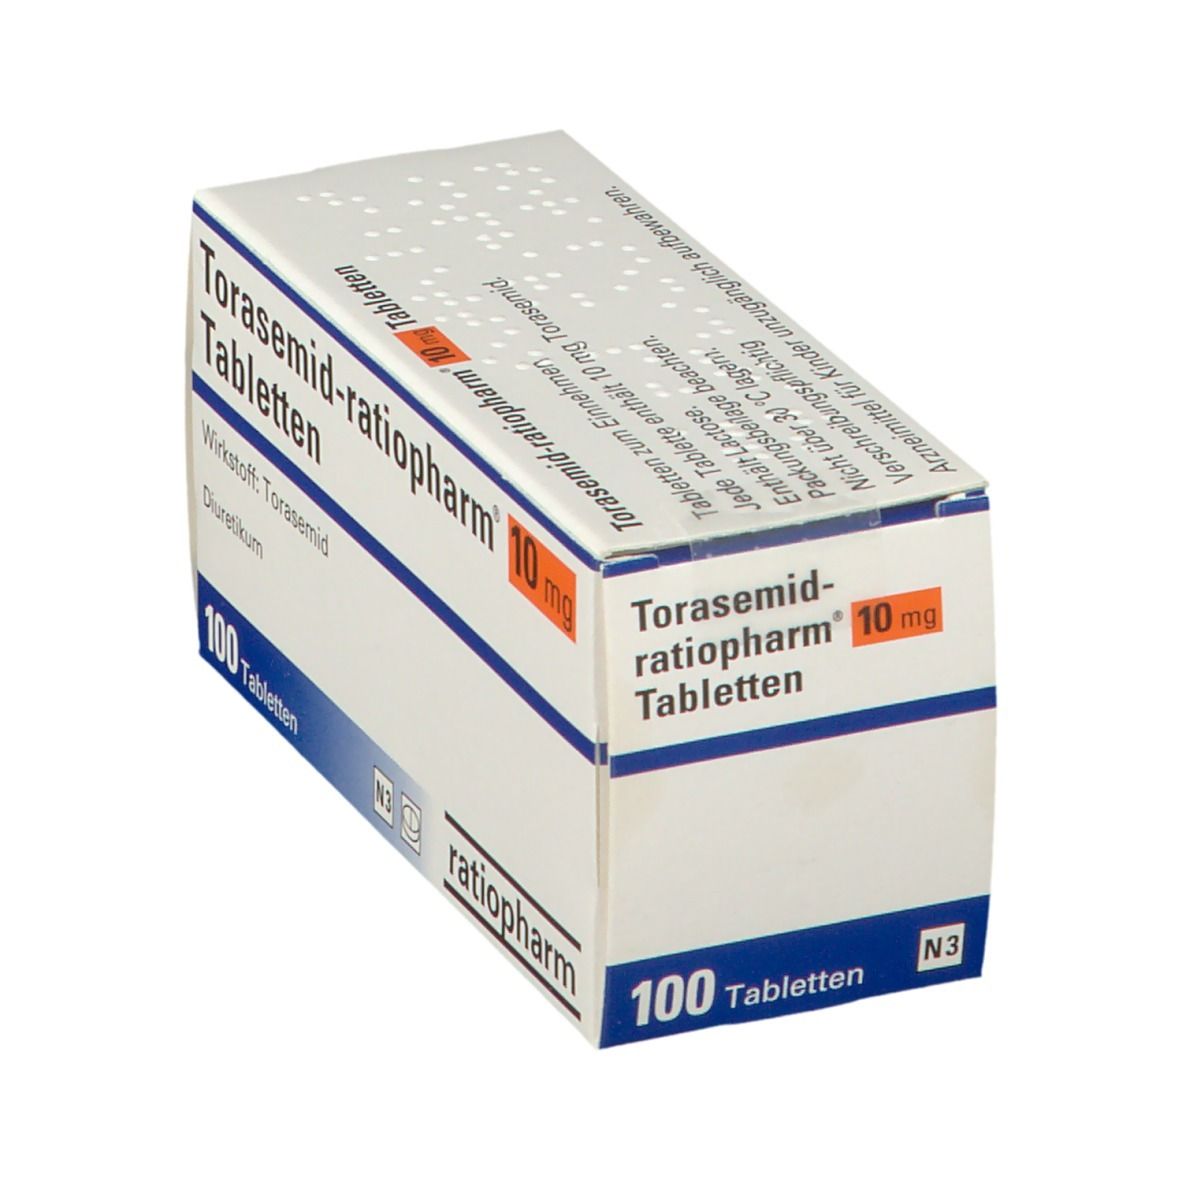 Torasemid-ratiopharm® 10 mg